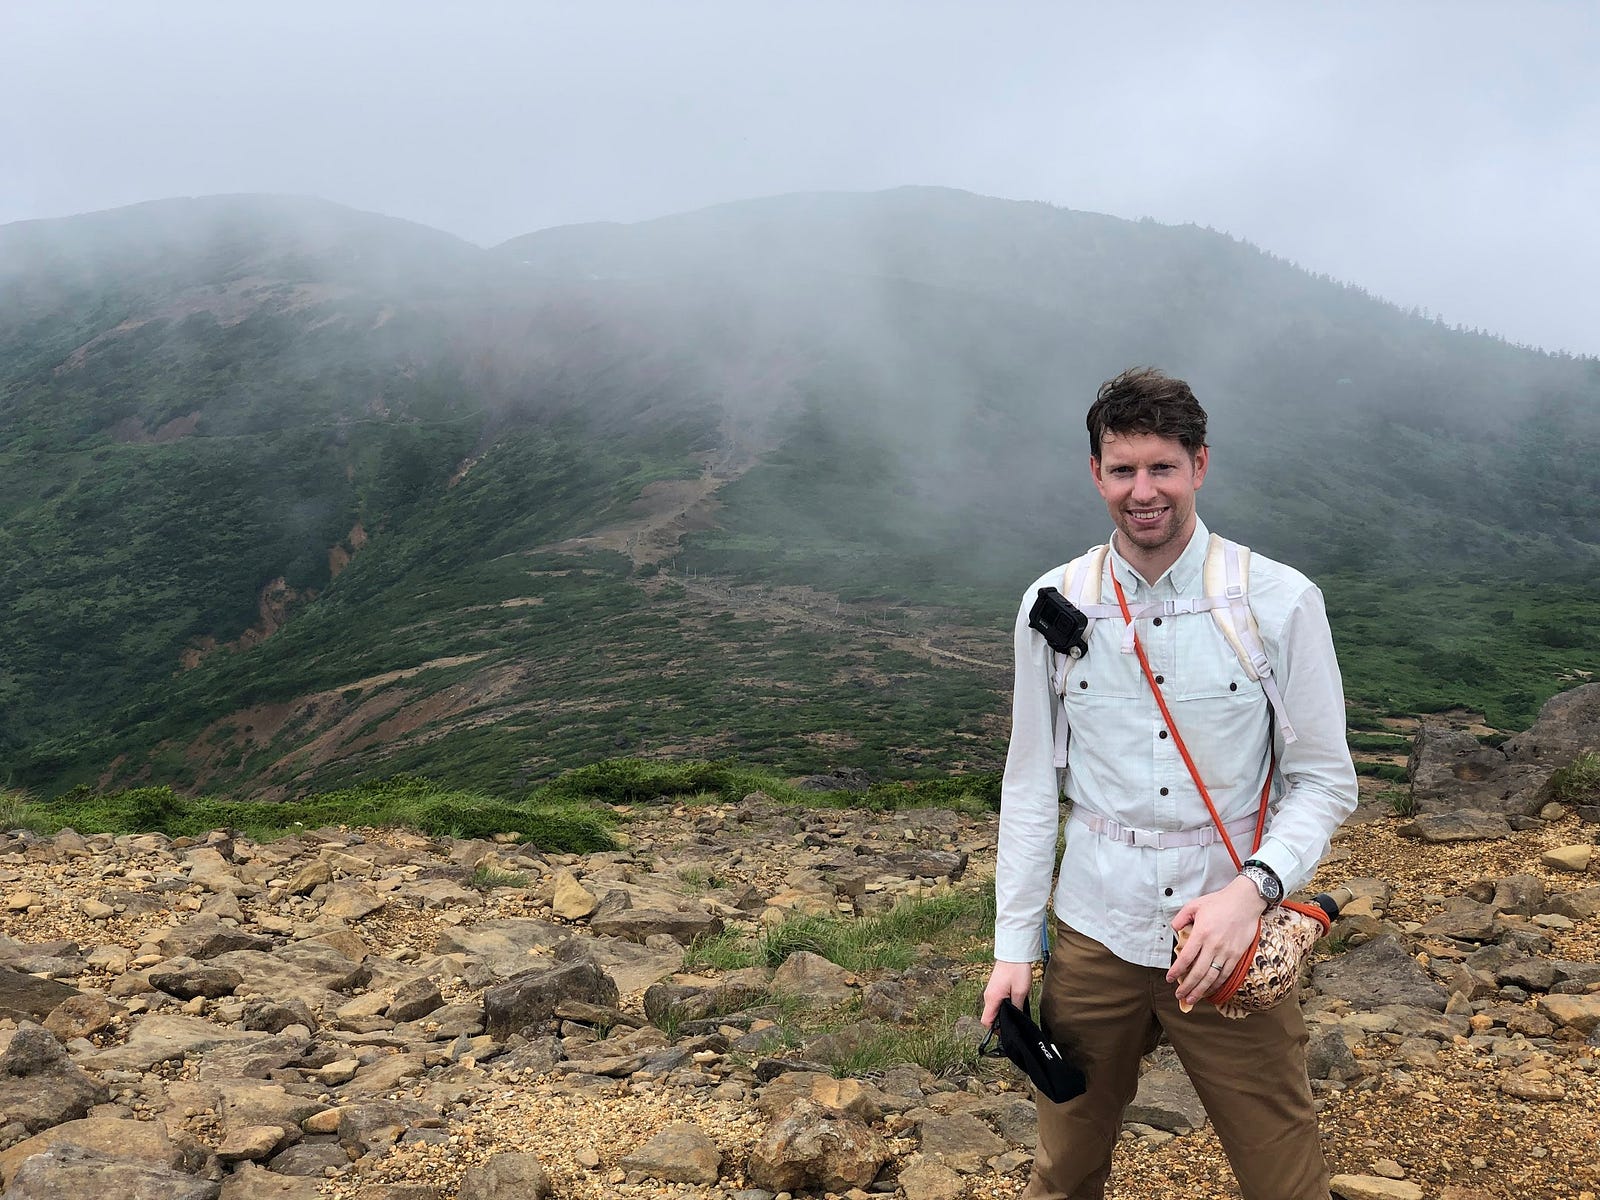 Tim Bunting AKA Kiwi Yamabushi posing on Zao-san (Mt. Zao) near Kumano-dake looking towards Jizo-dake, yet shrouded in cloud.